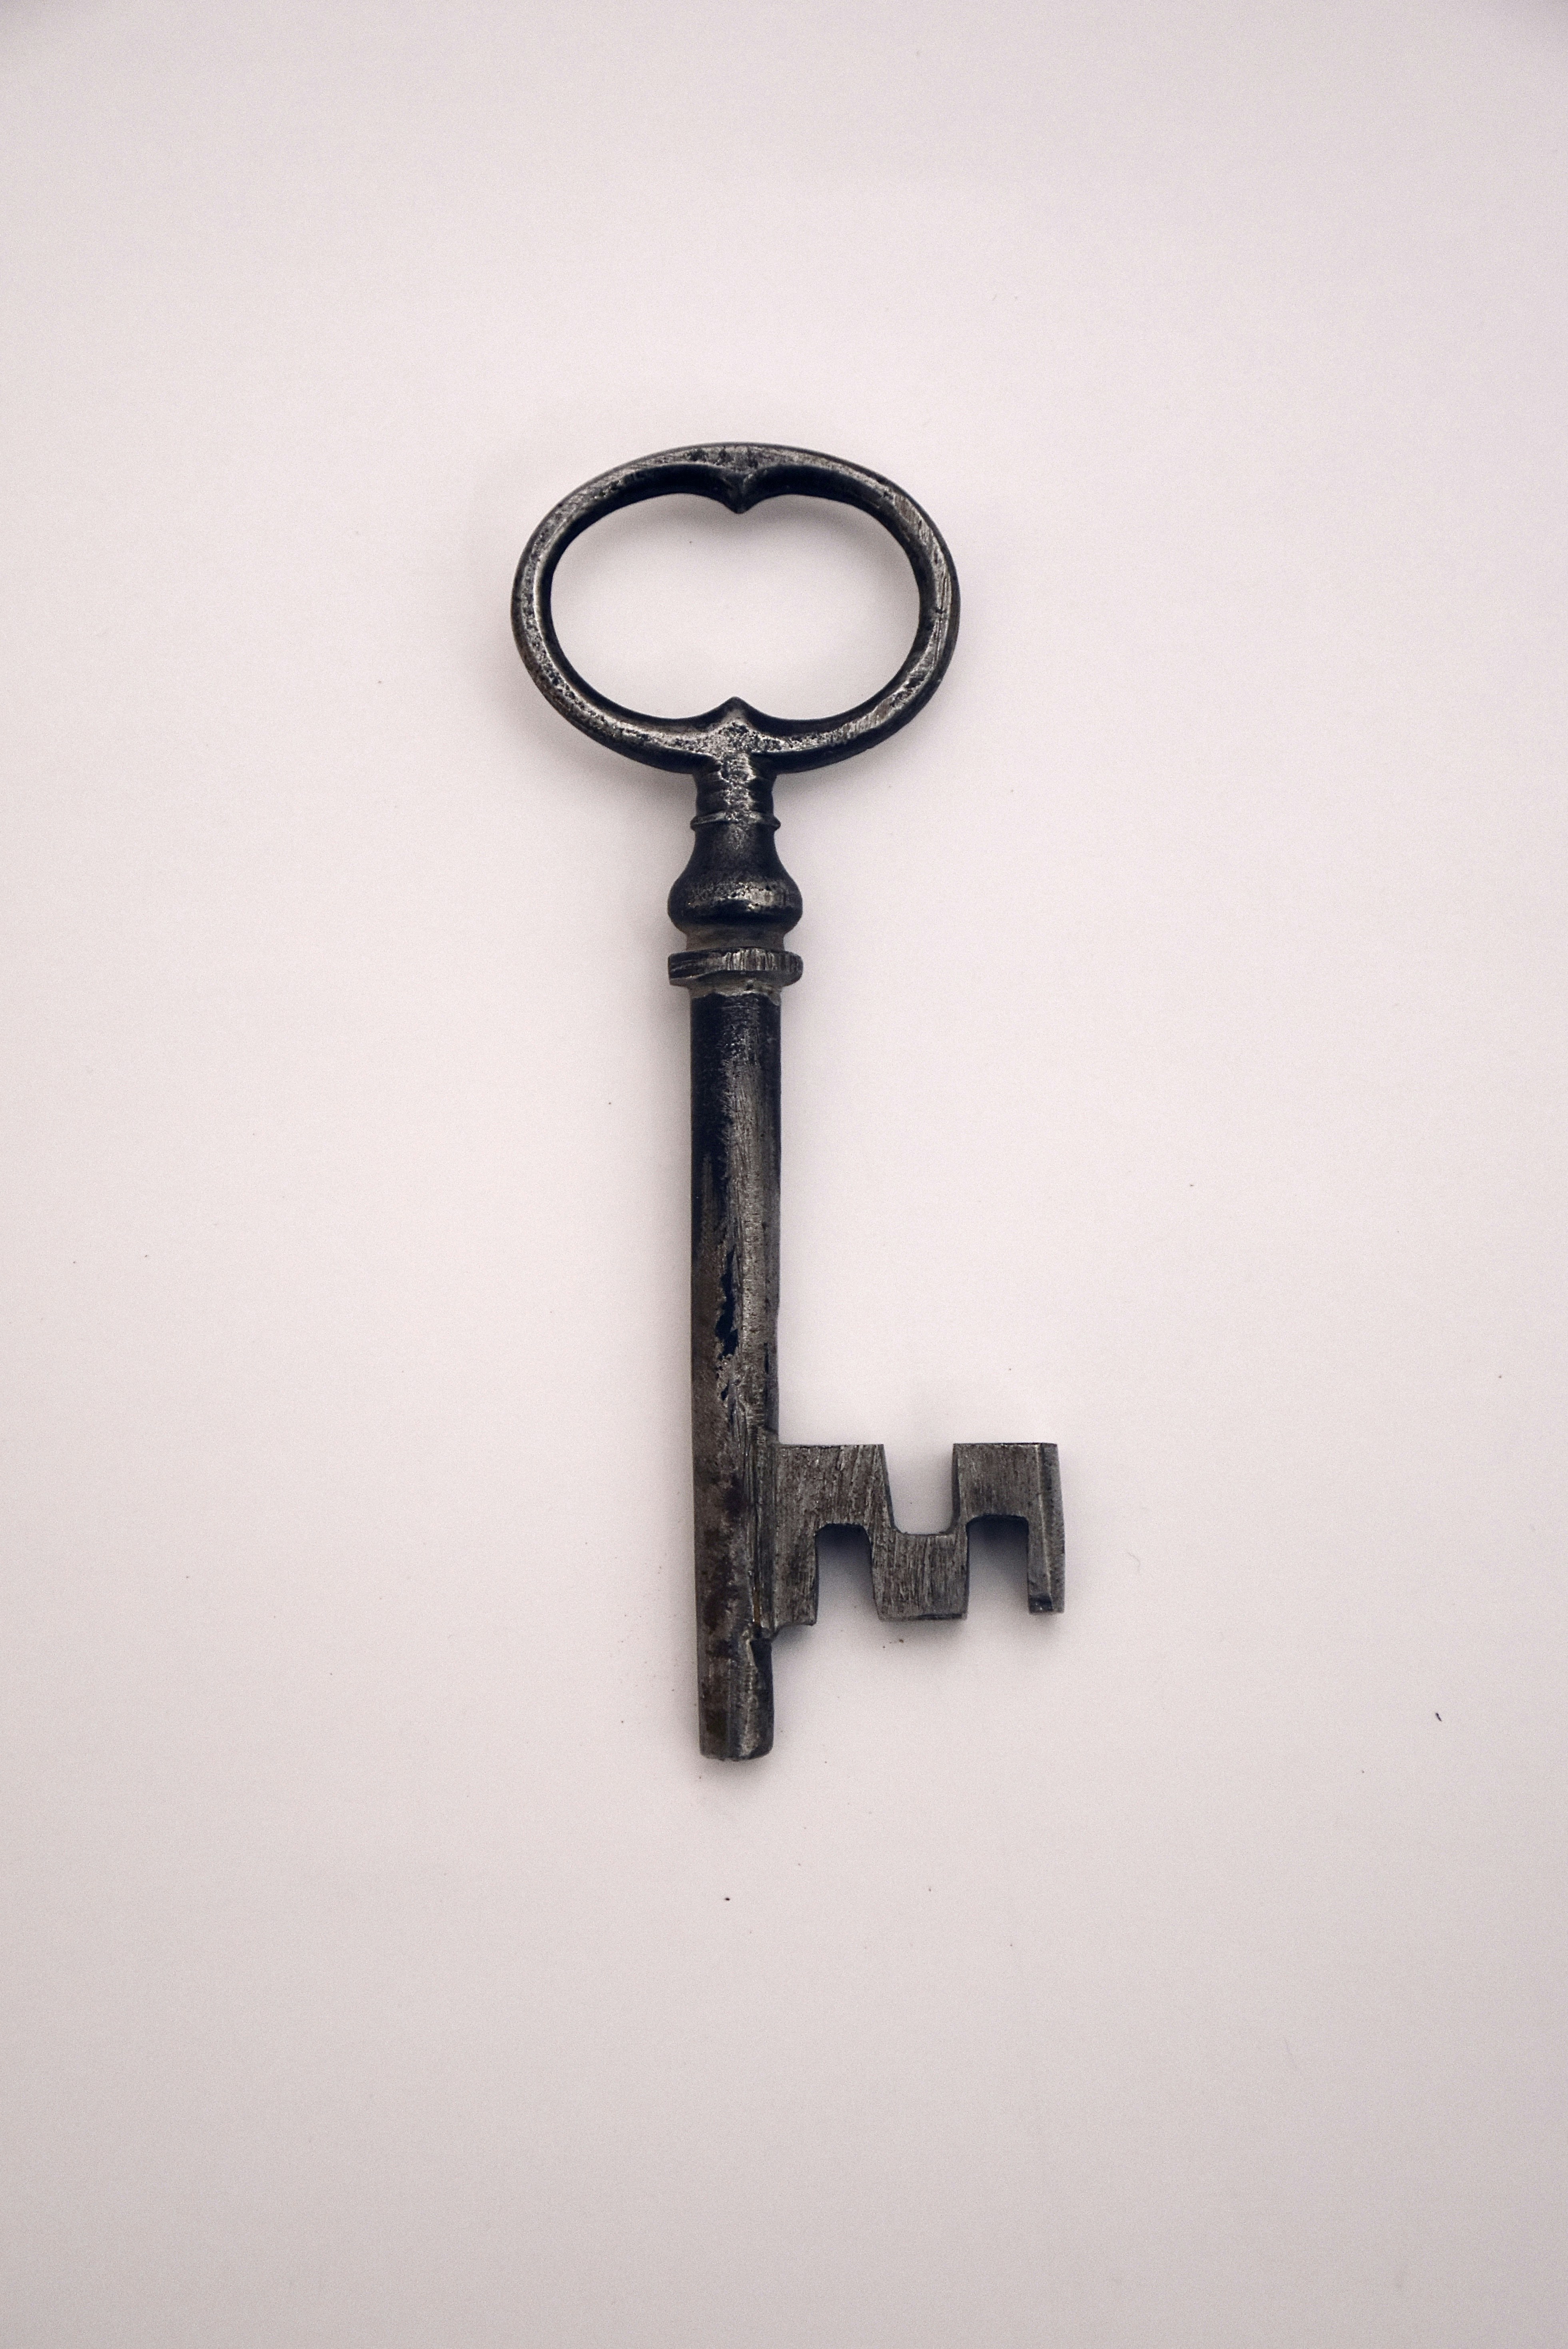 Chevy Silverado Locked Keys Inside While Running